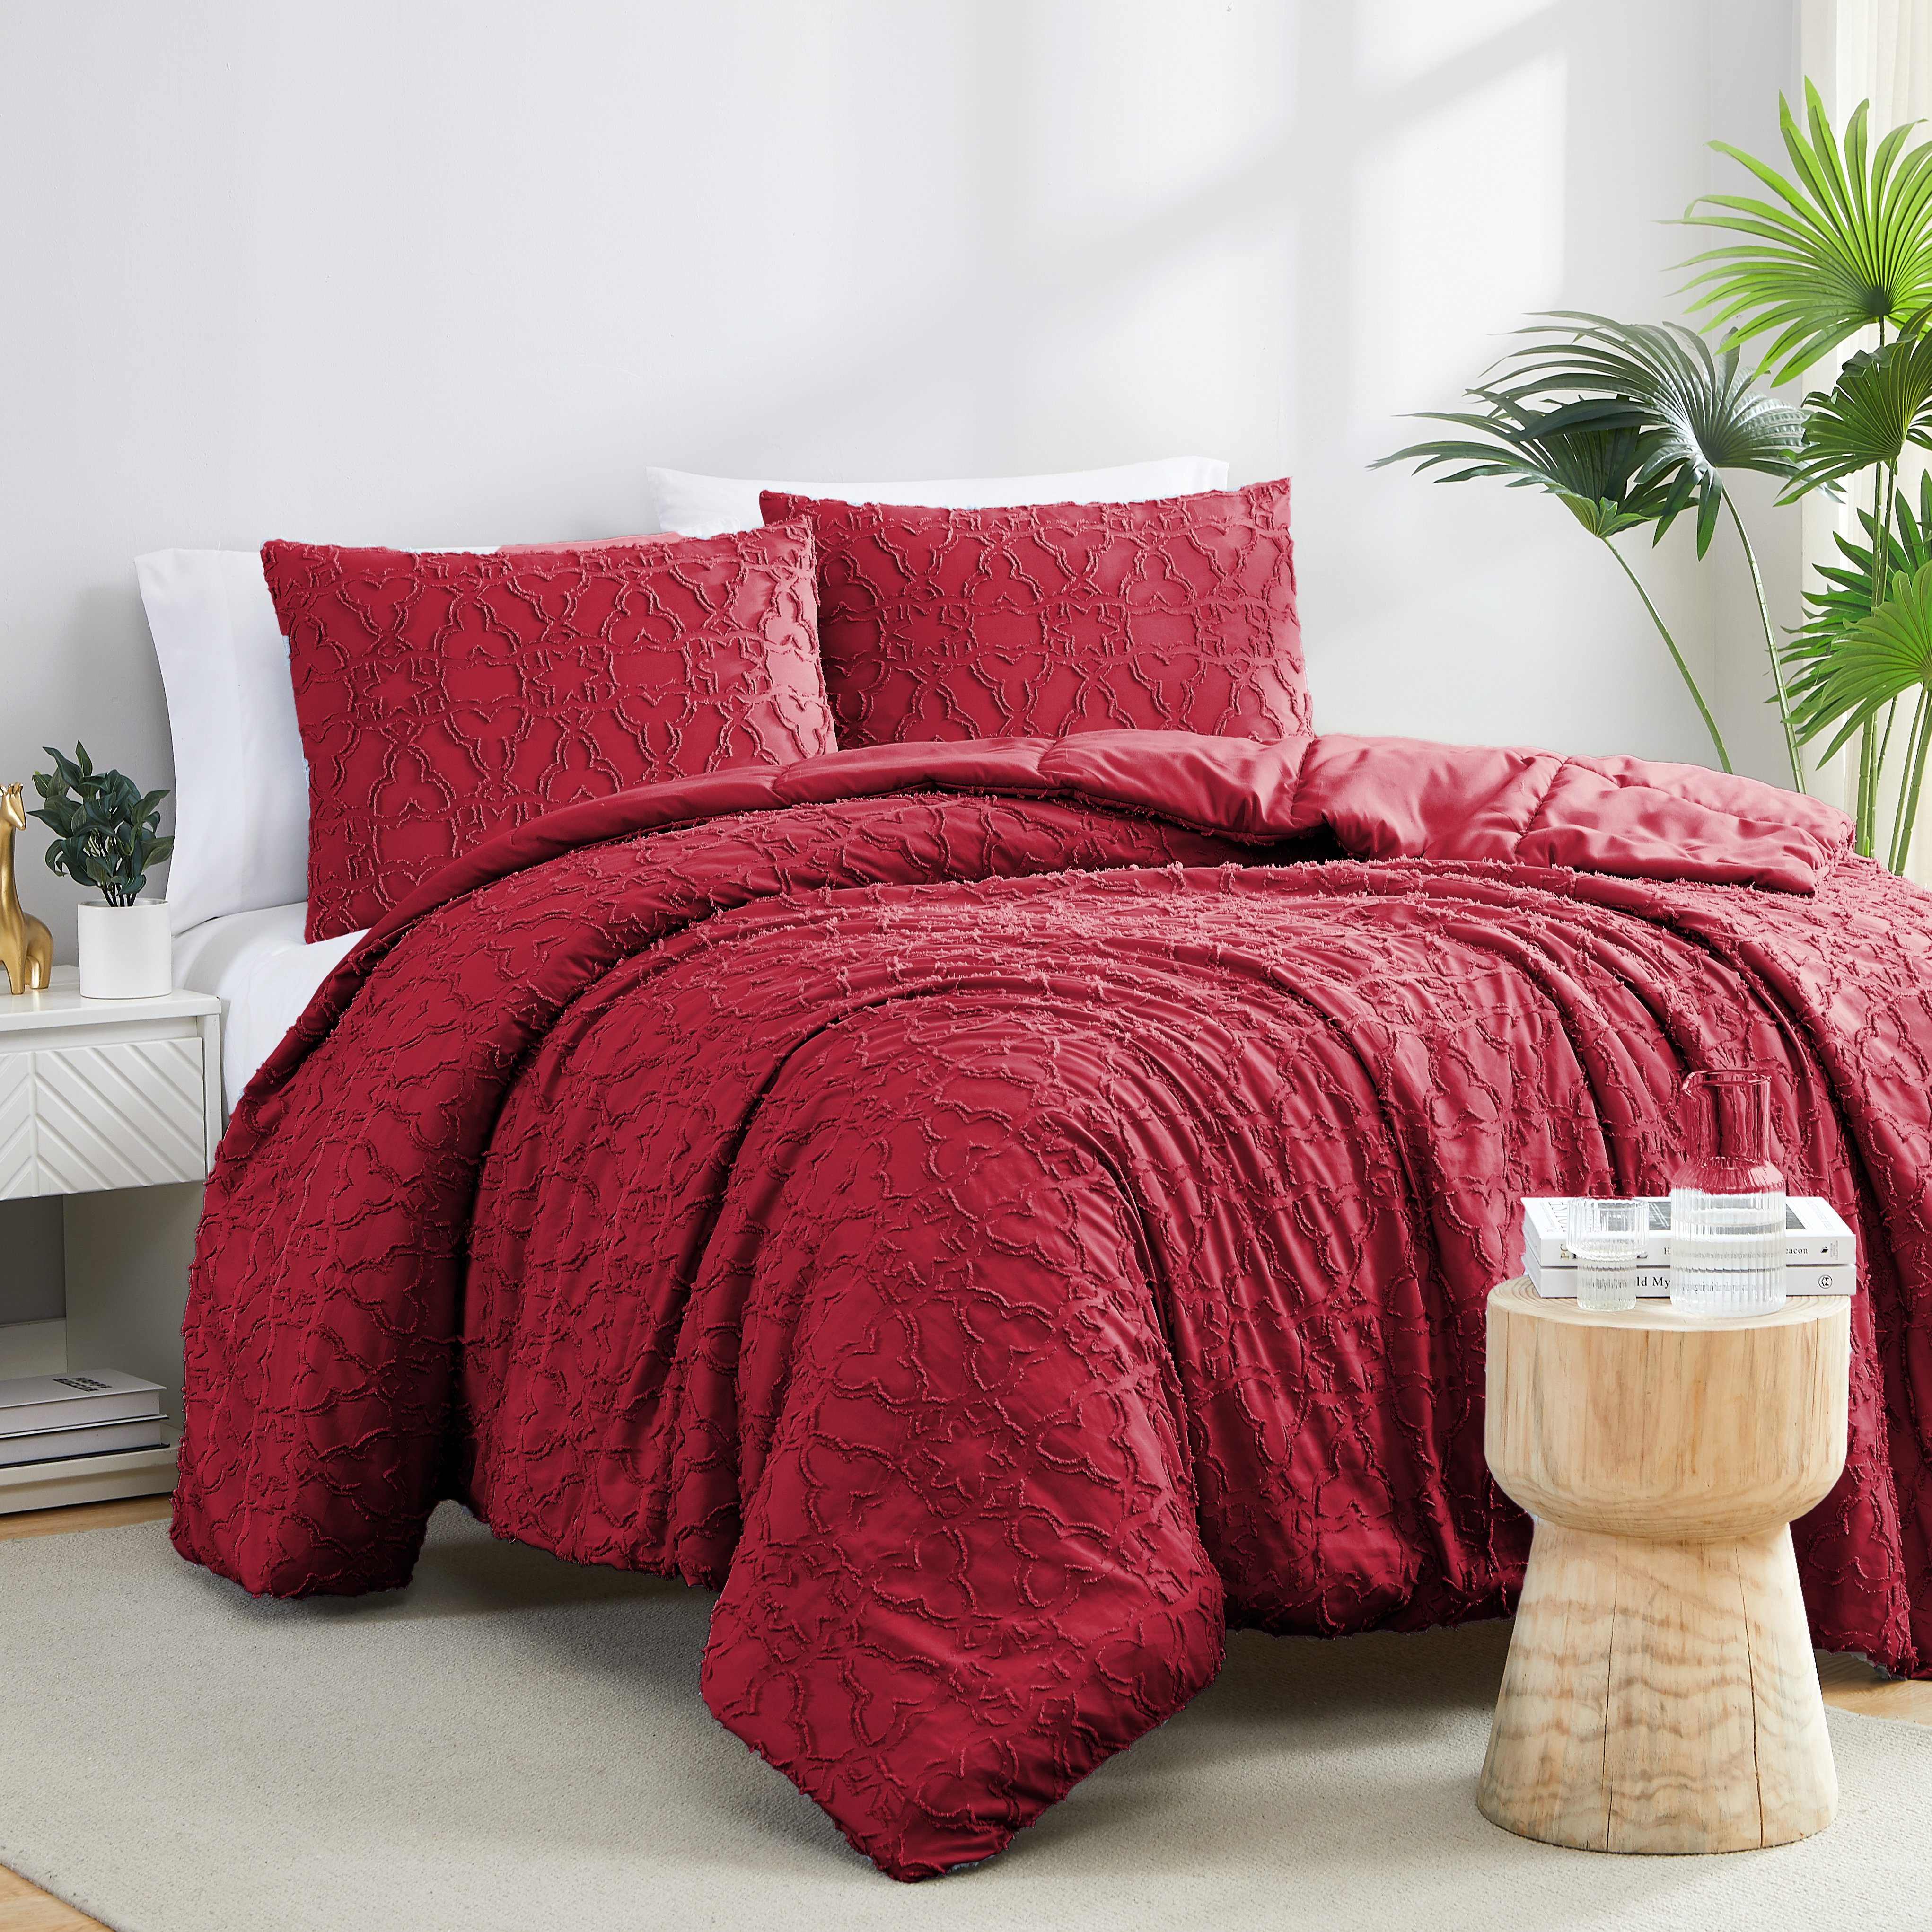 Suniya White Microfiber Reversible Comforter Set Jacquard & Tufted Red Barrel Studio Color: White, Size: Queen Comforter